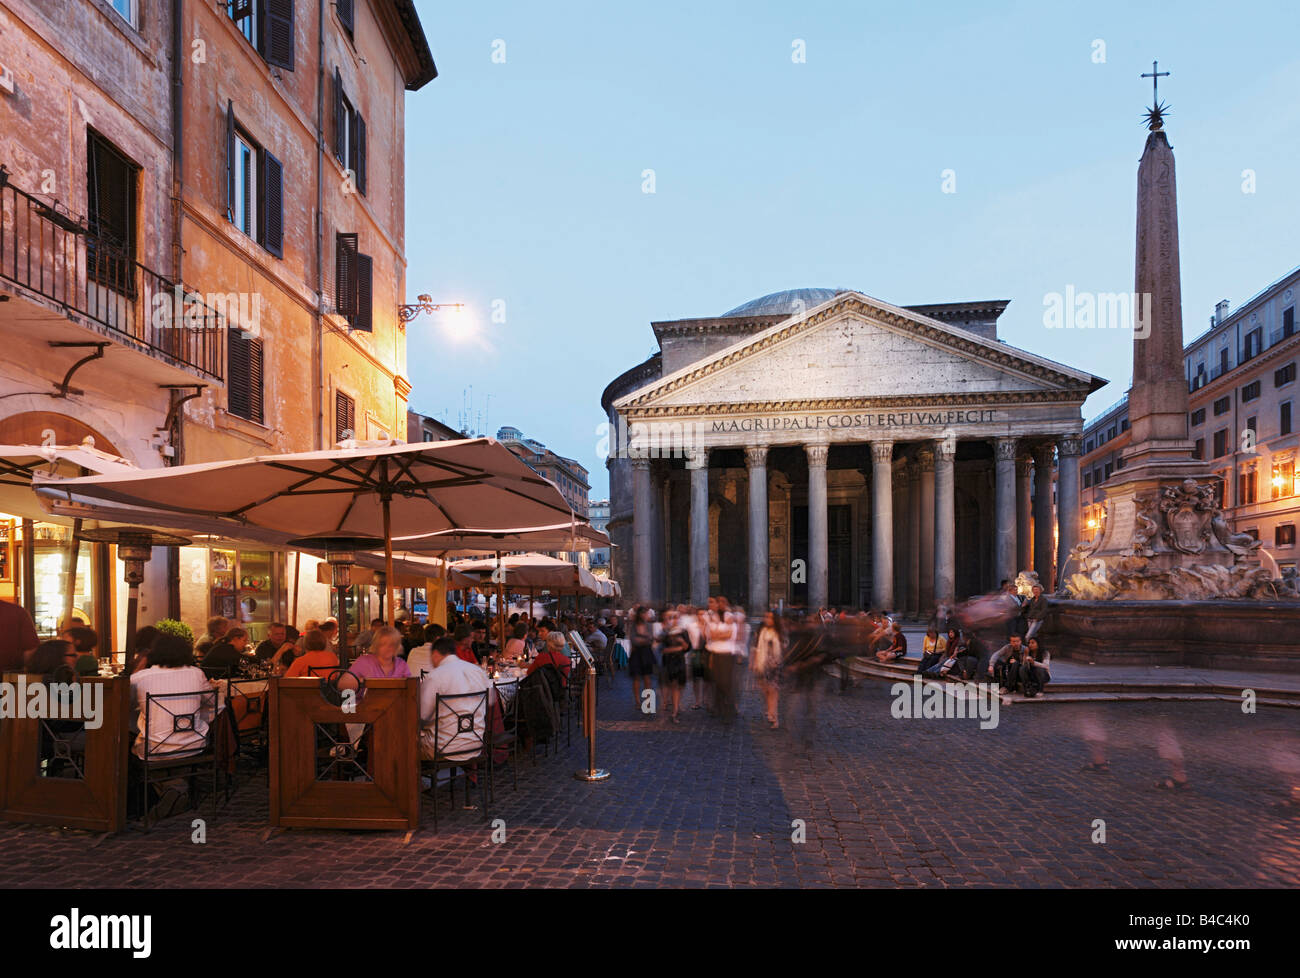 Pantheon at Piazza de Rotonda Rome Italy Stock Photo